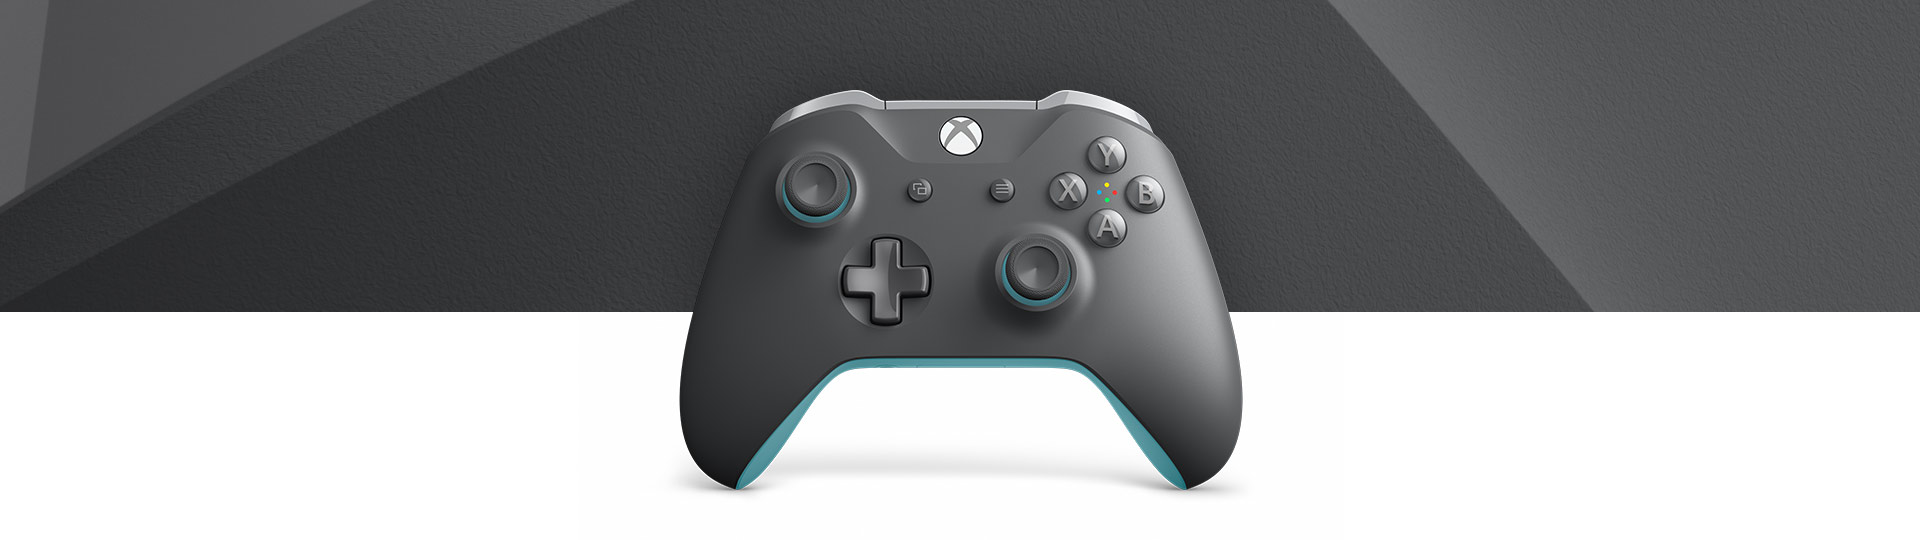 Frontansicht des Xbox Wireless Controller Grau/Blau